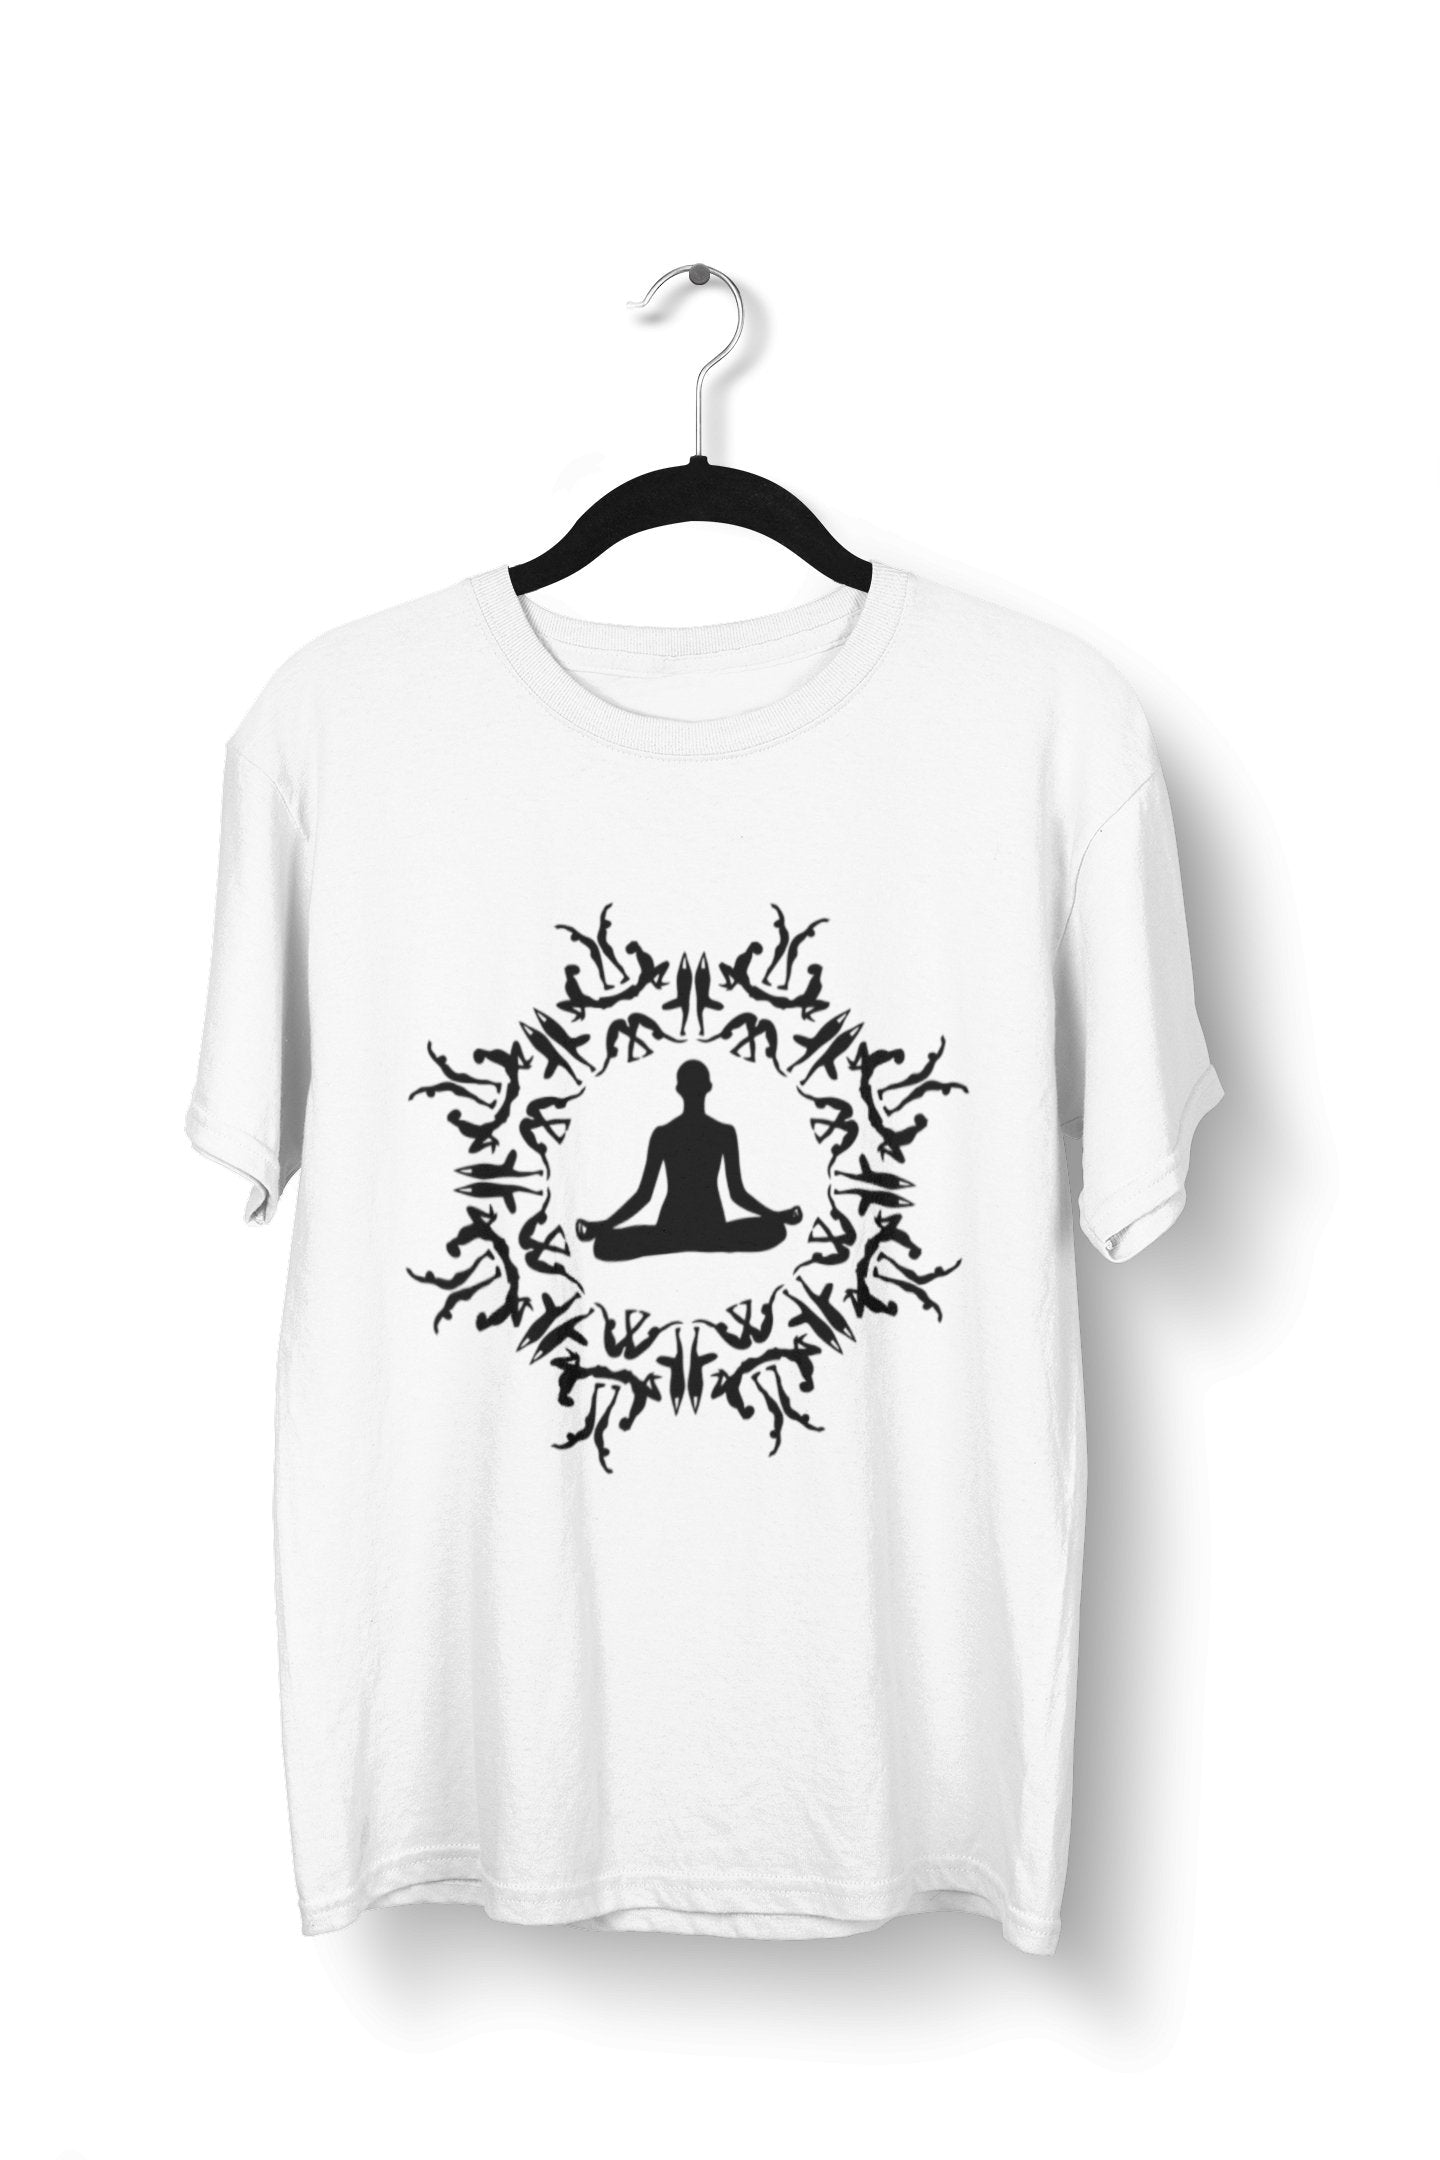 thelegalgang,Mandala Art Printed Yoga T-Shirt for Men,.